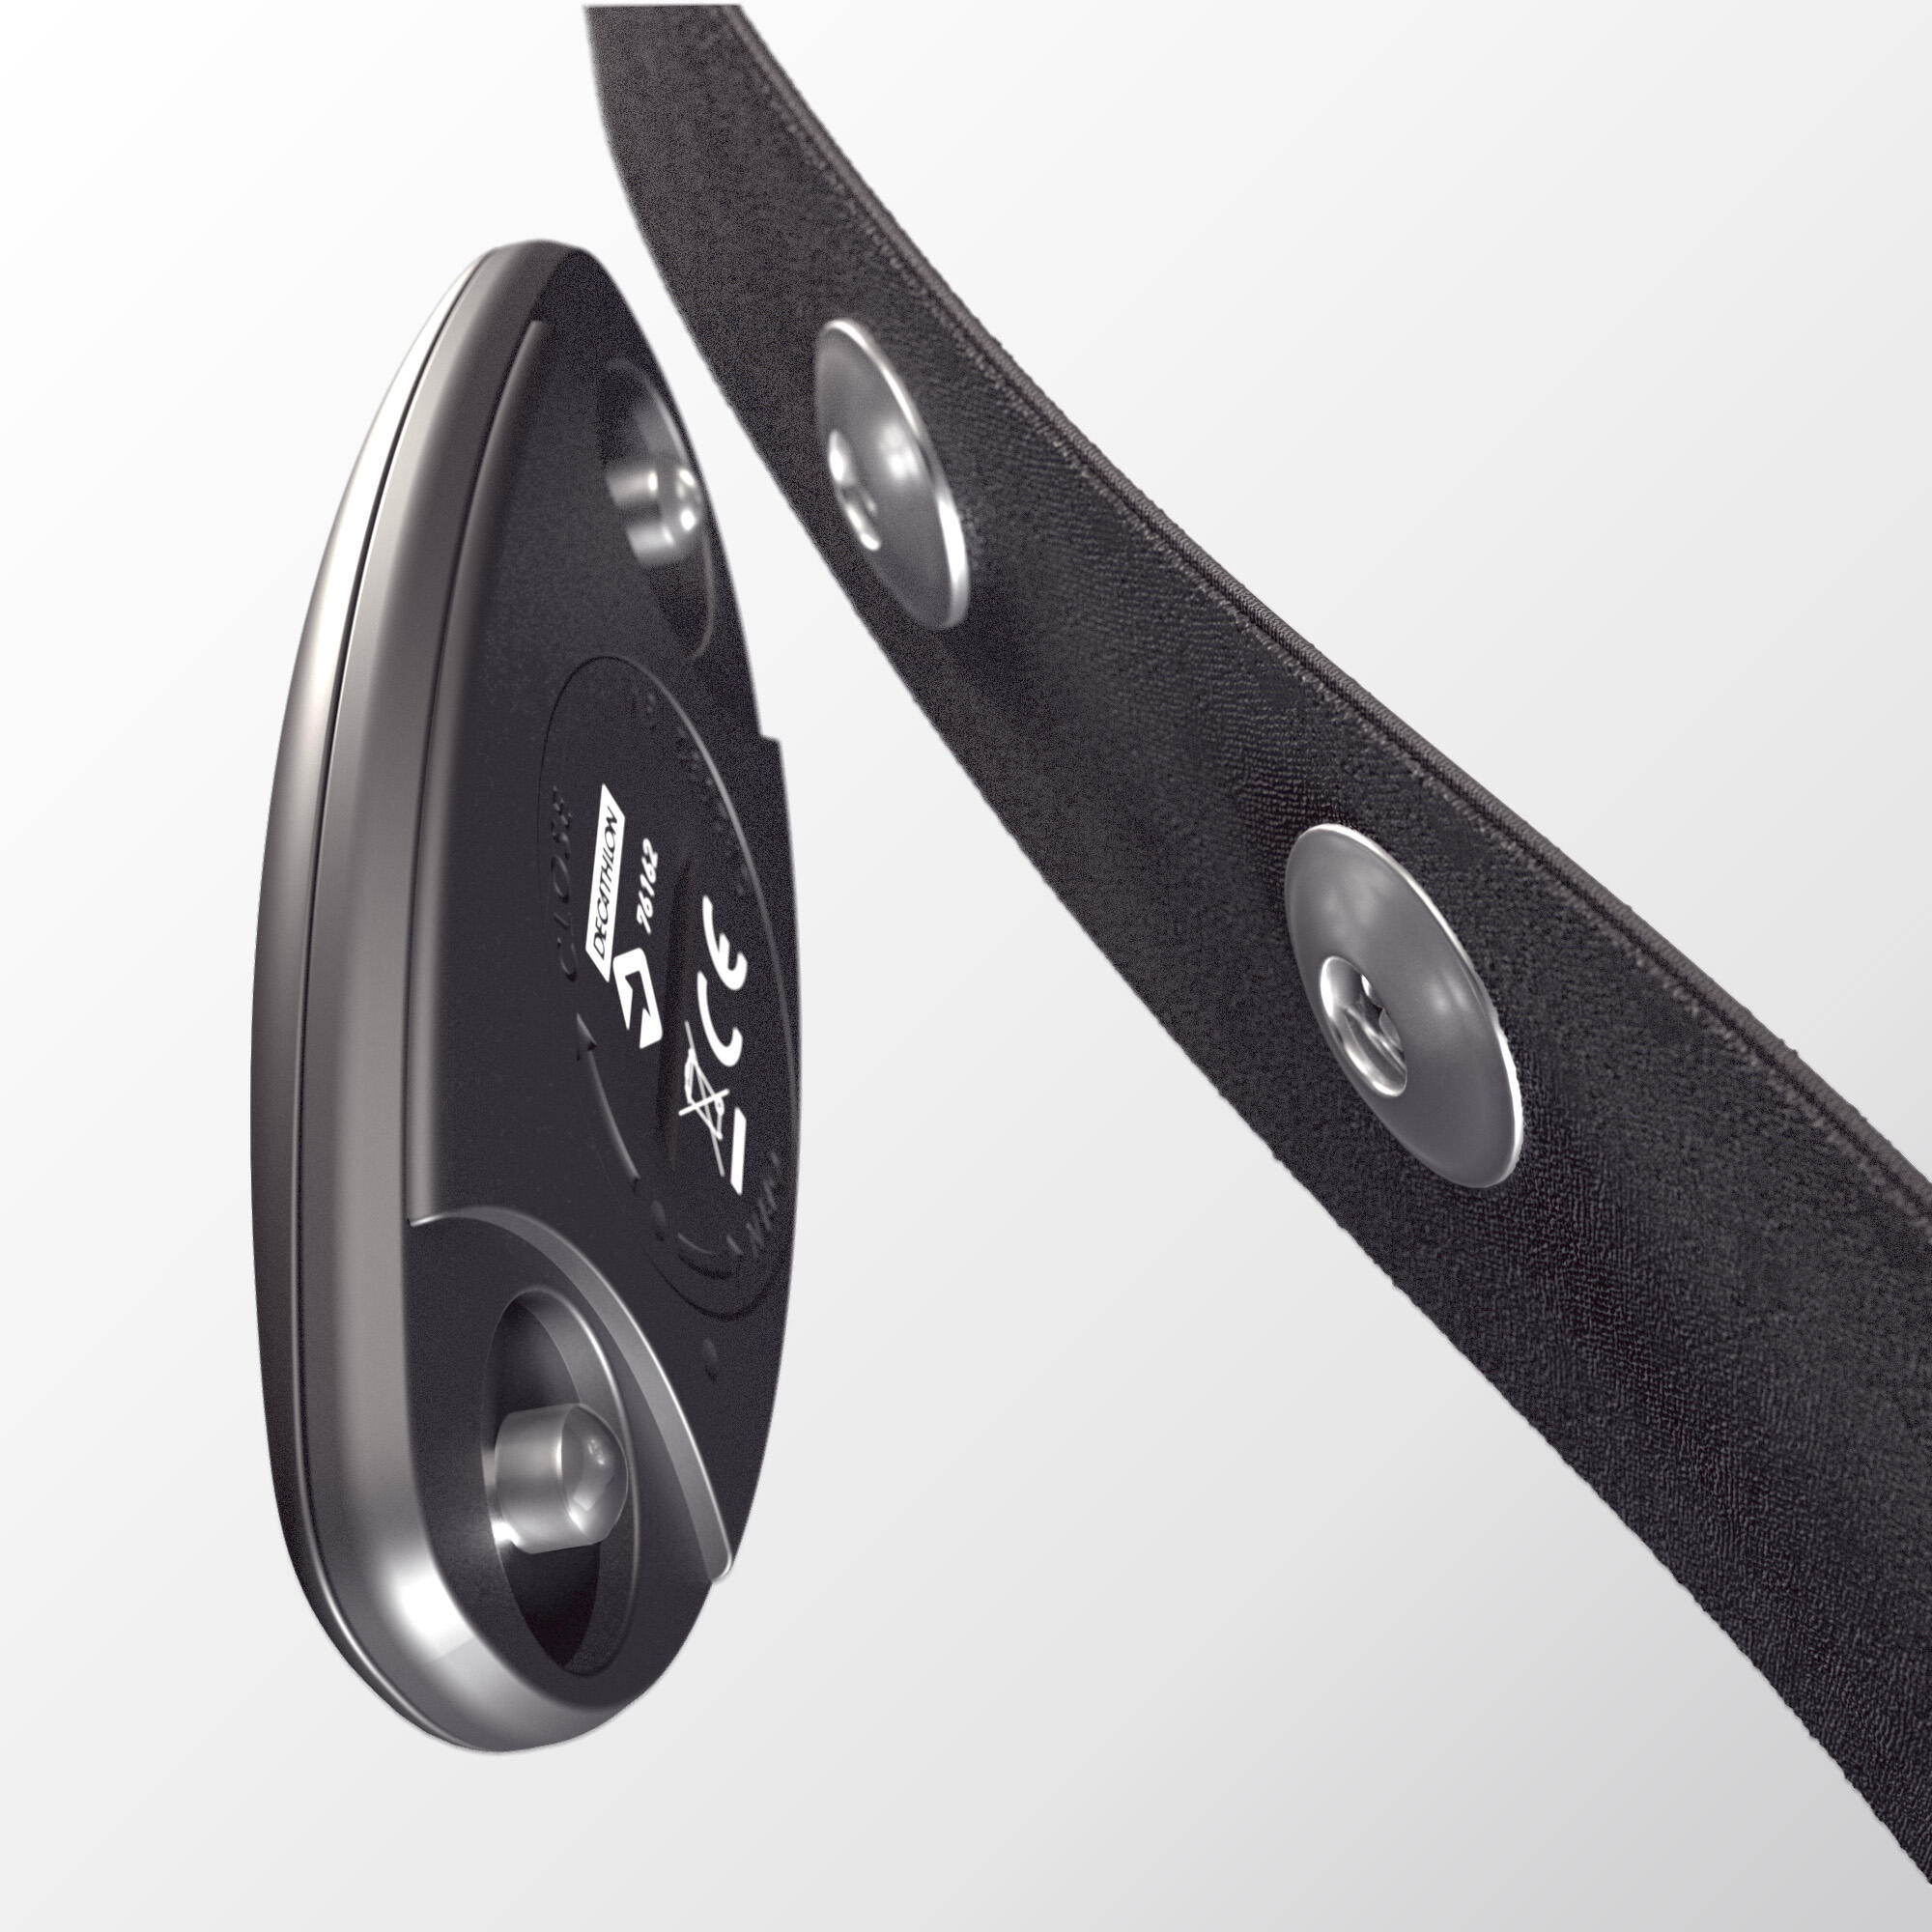 Bluetooth Smart Runner's Heart Rate Monitor Belt - Black - Kalenji -  Decathlon